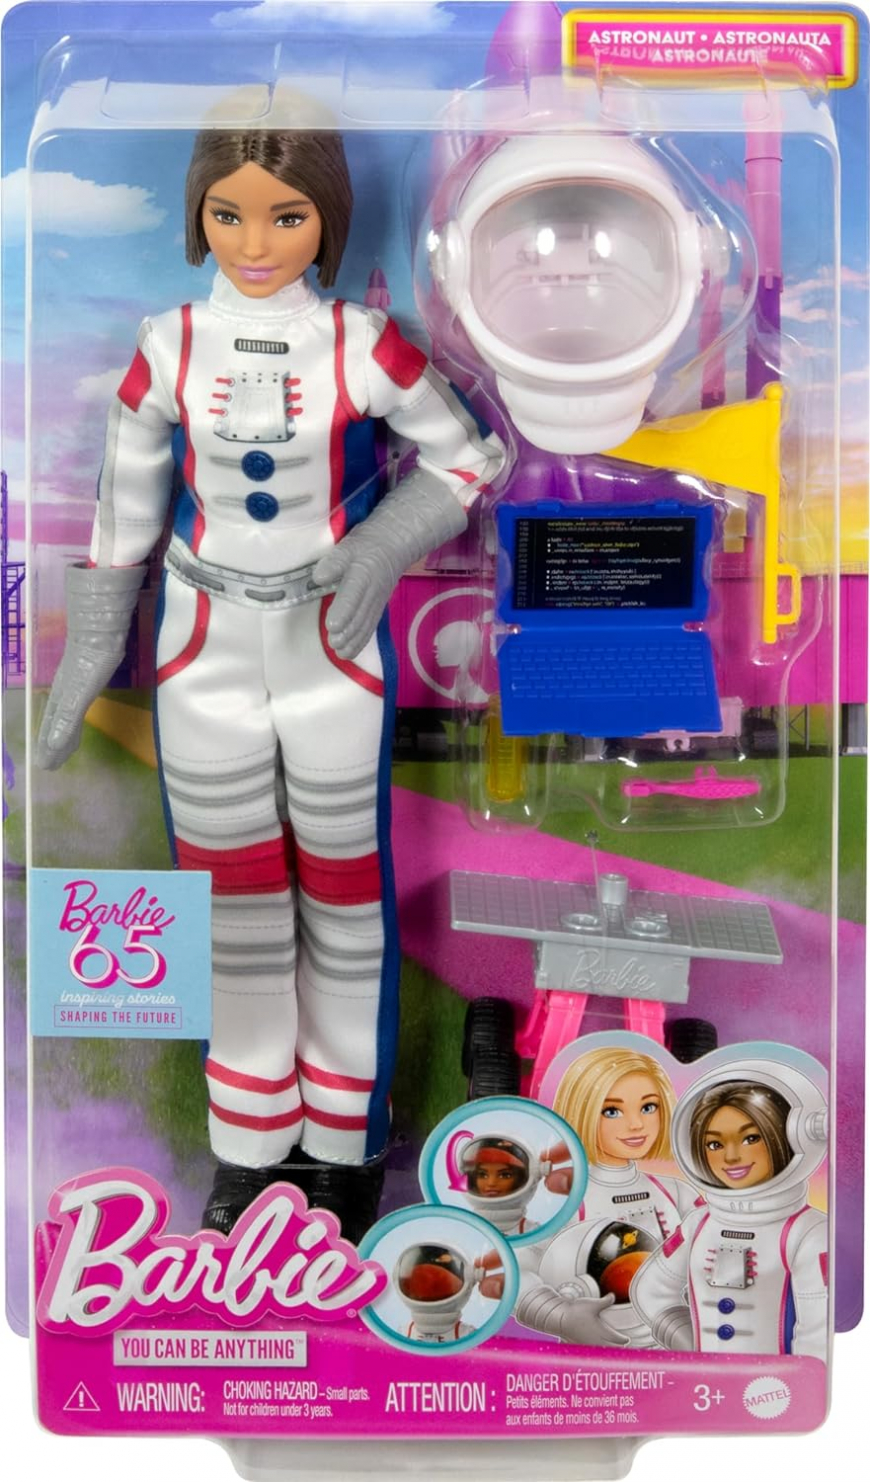 Barbie 65th Anniversary Astronaut doll